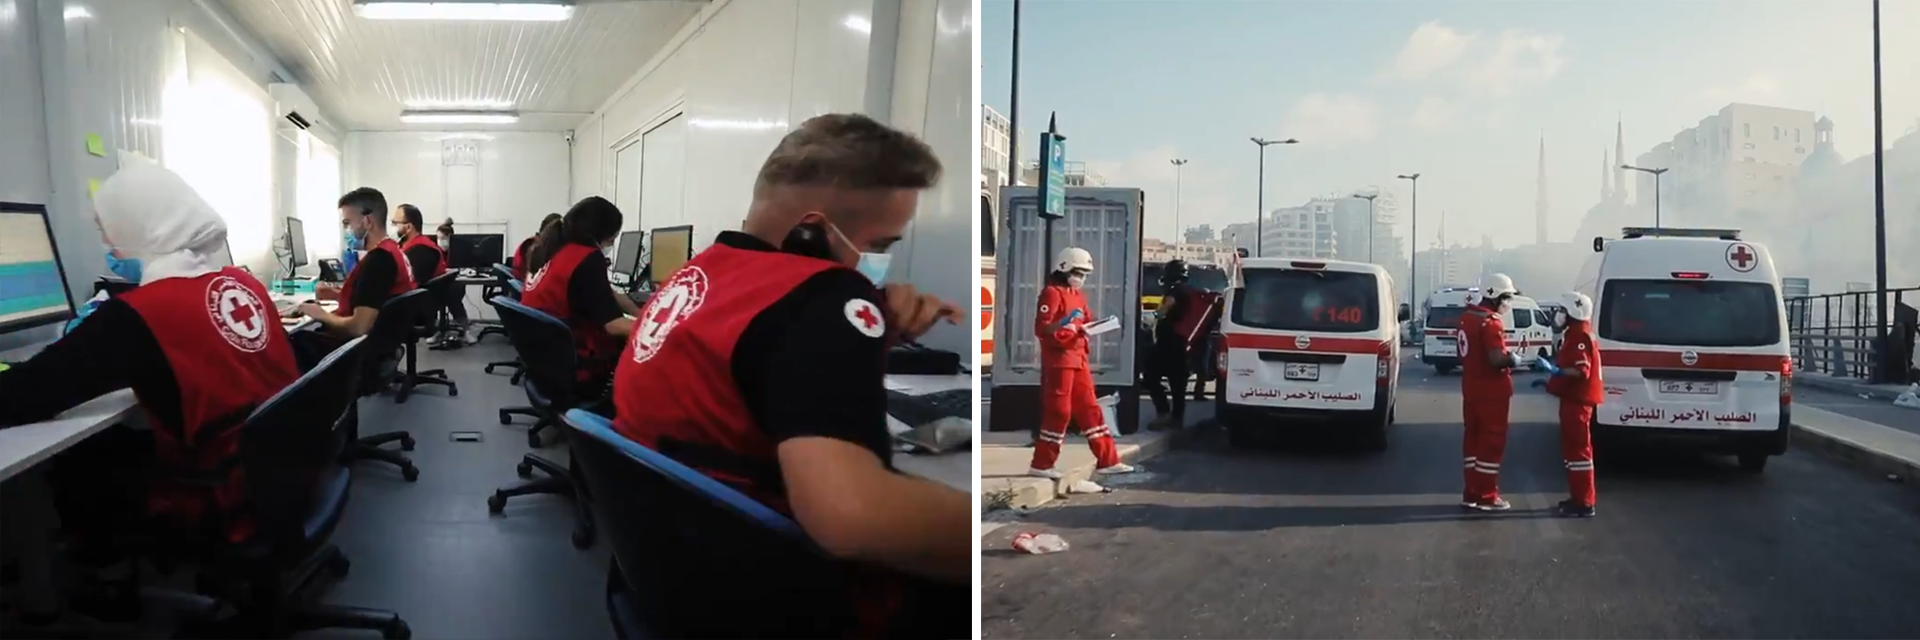 Rotes Kreuz hilft im Libanon